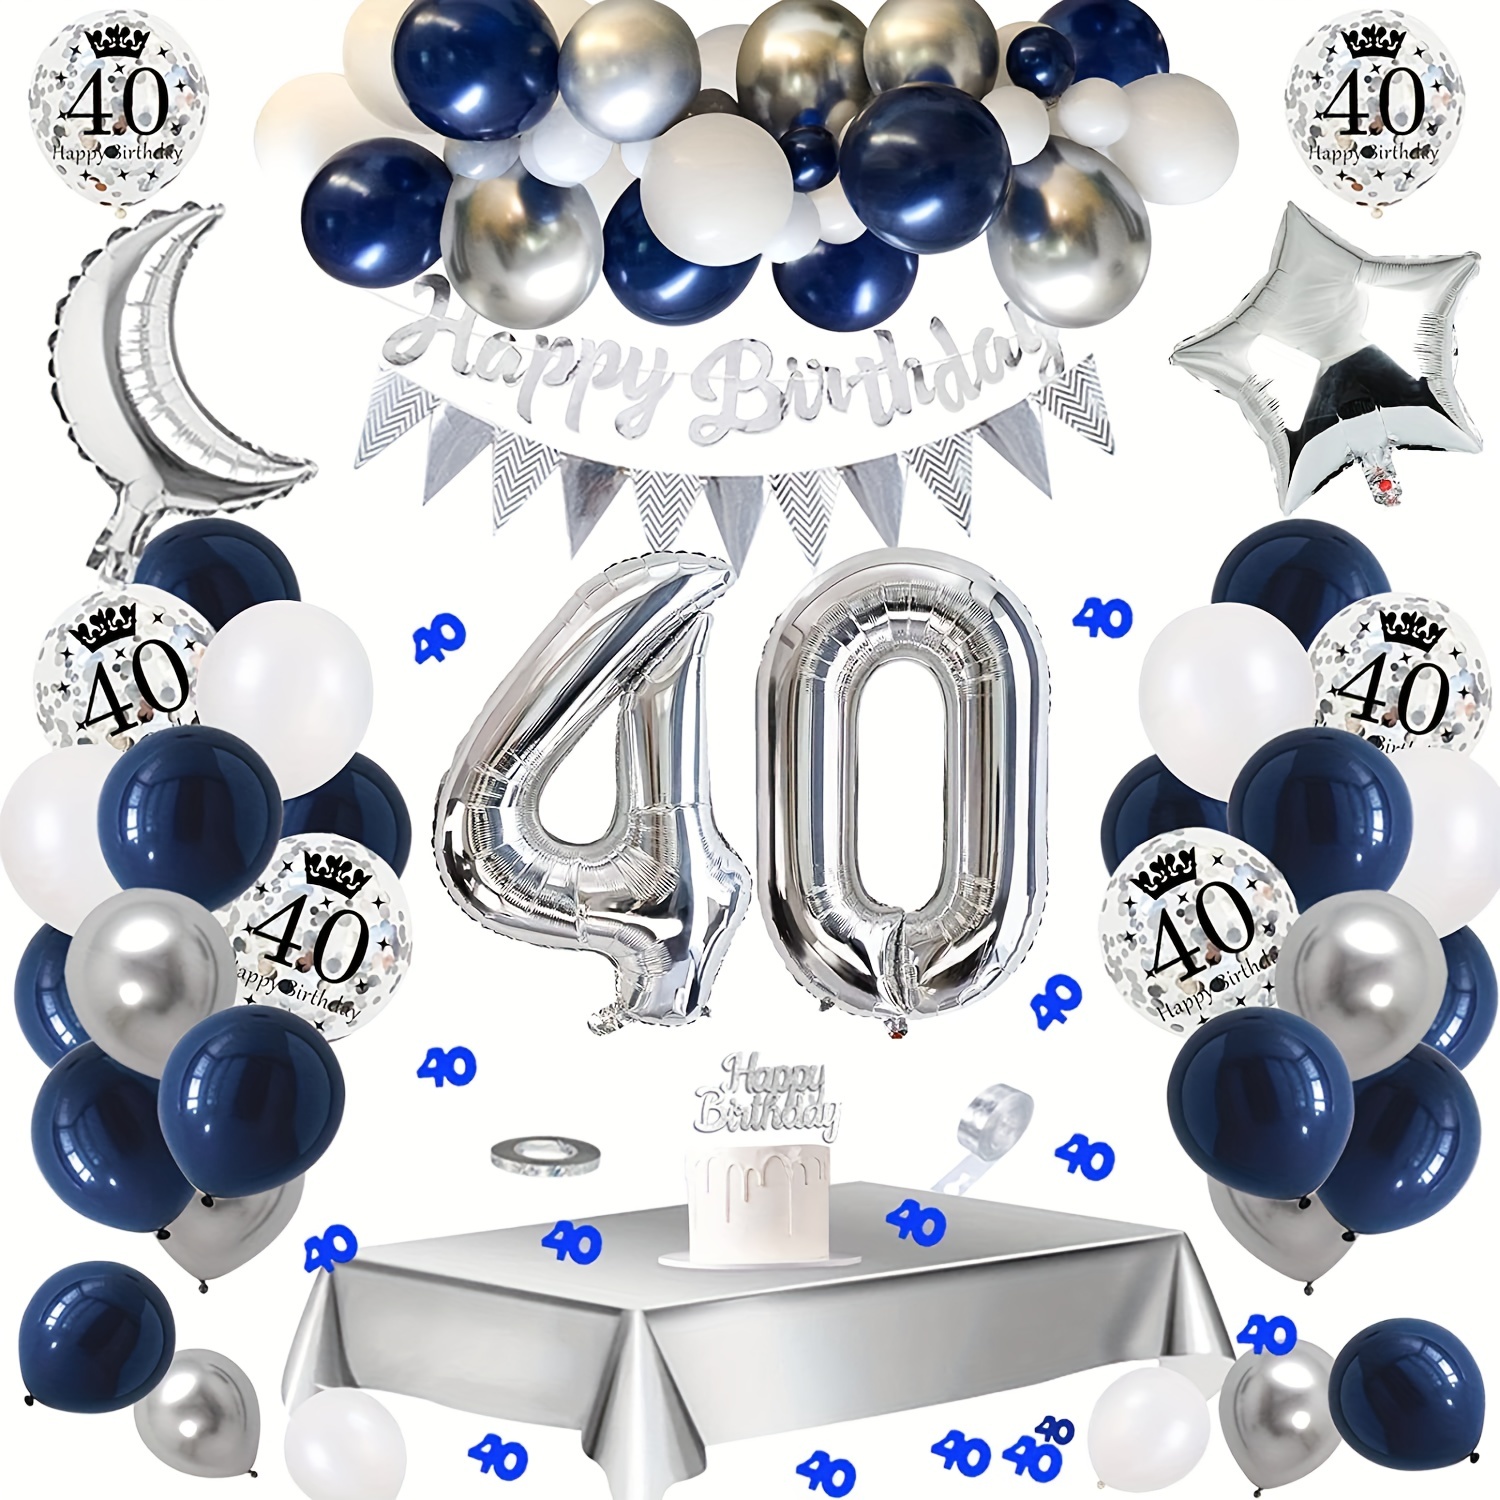 40 Cumpleaños, 40 Decoración Cumpleaños, 40 Decoración Globo, 40